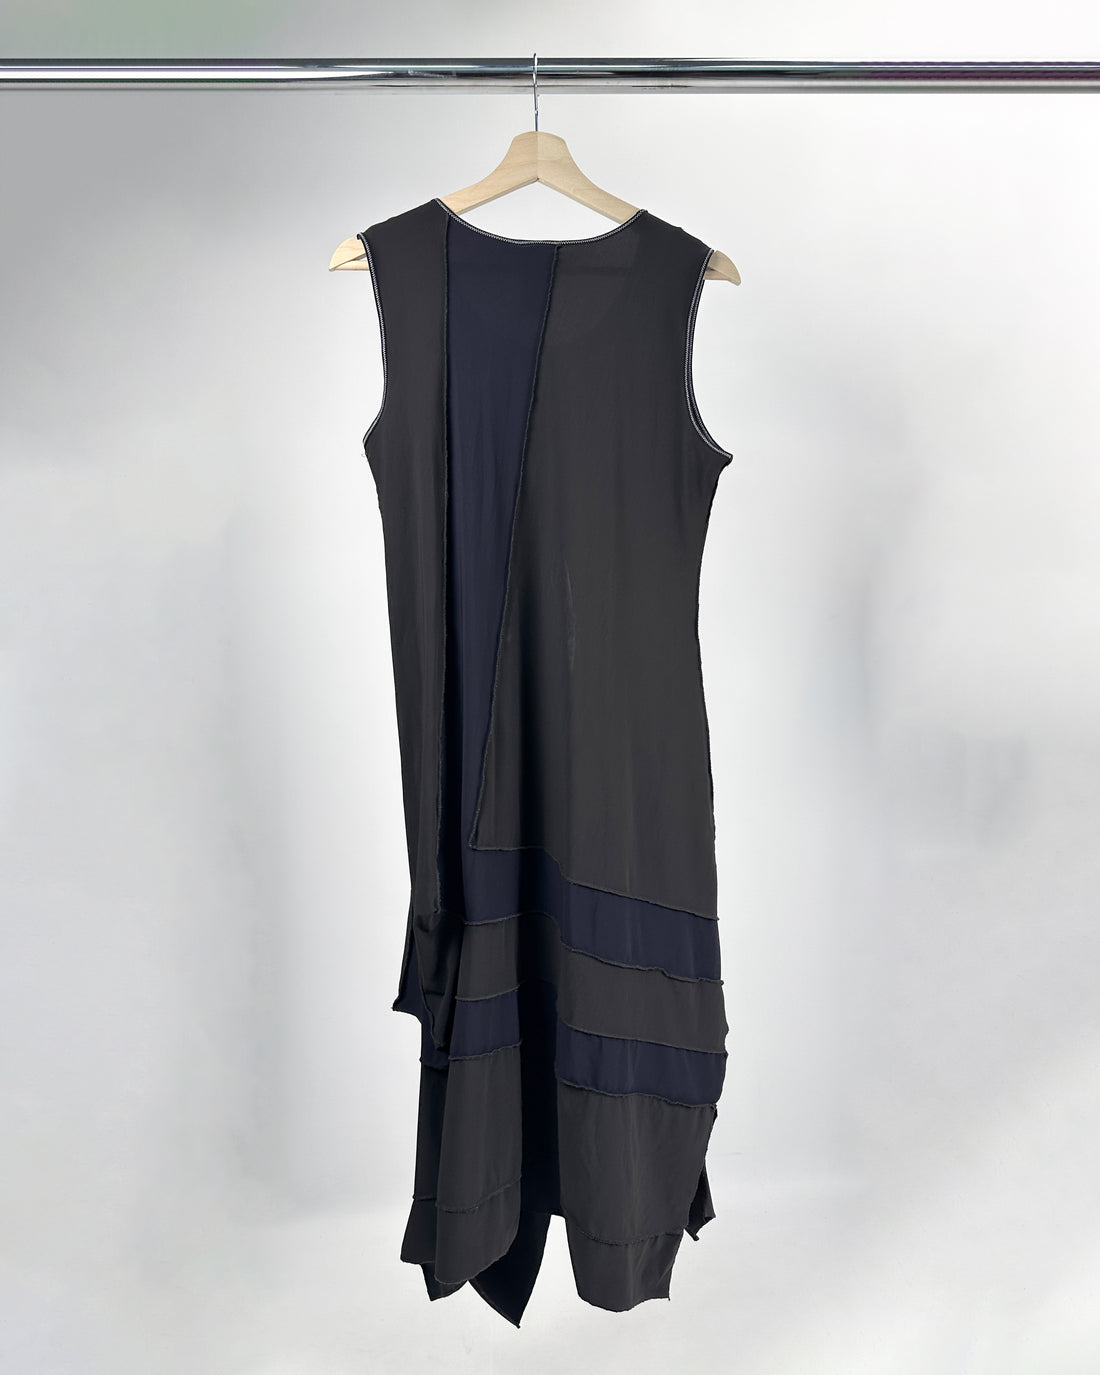 Marithé Francois Girbaud Distressed Elastic Dress 2000's